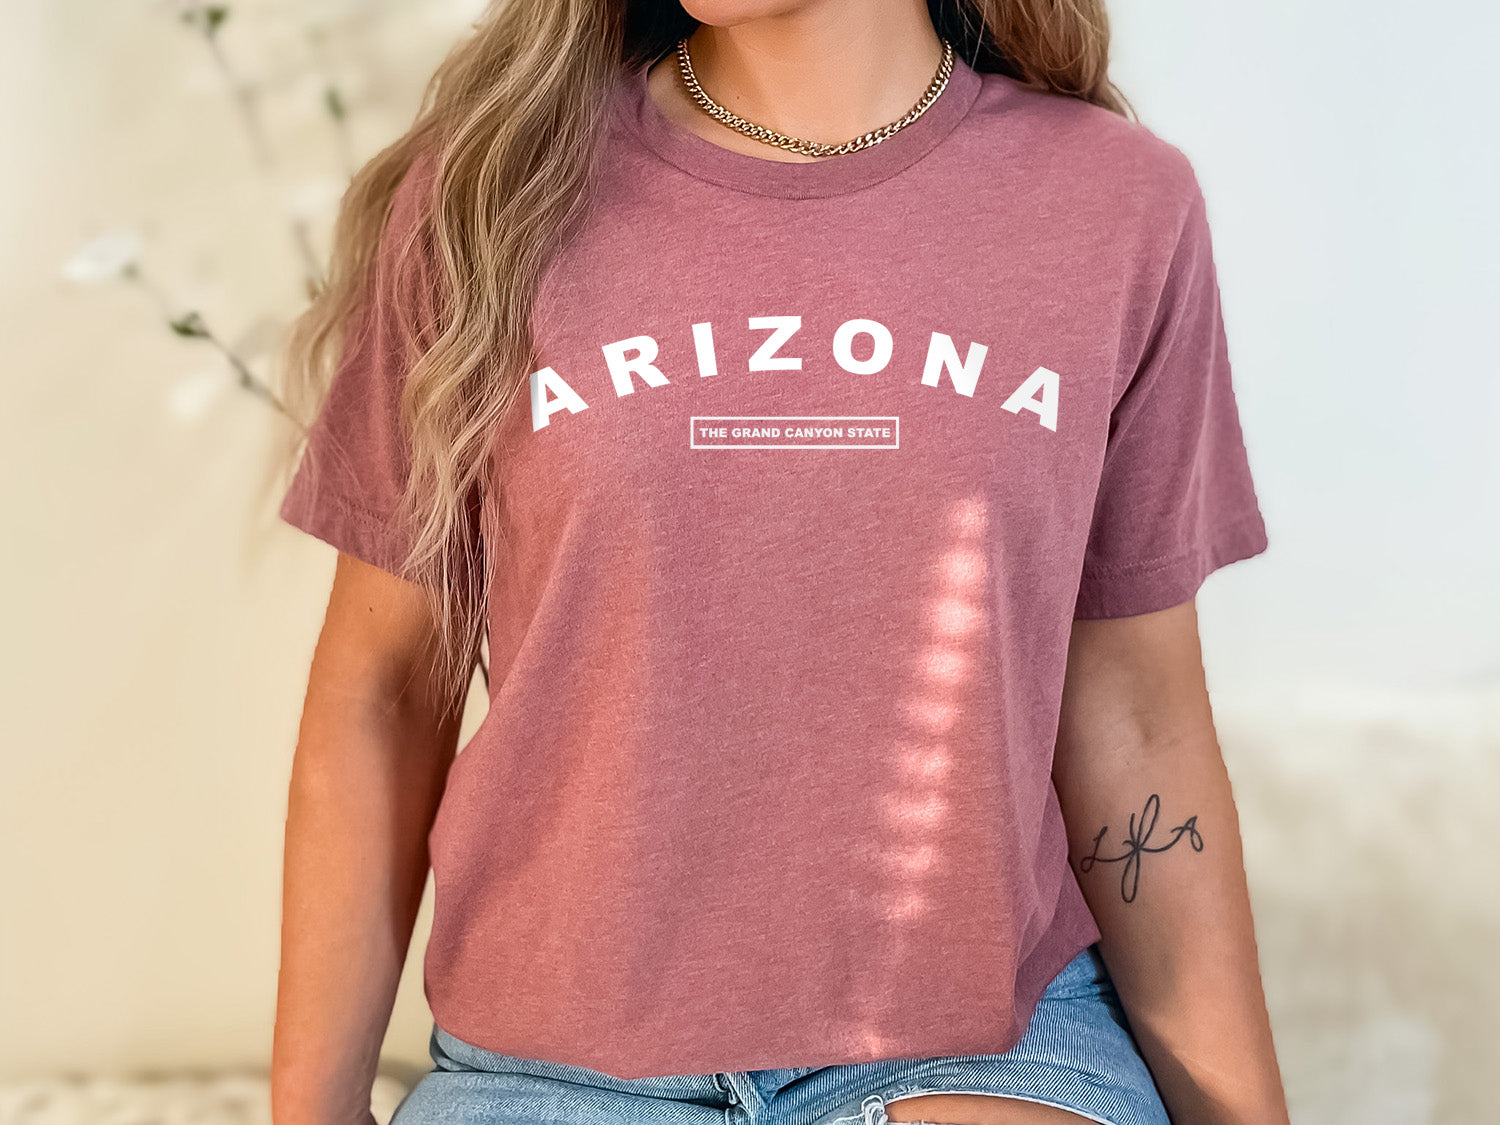 Arizona The Grand Canyon State T-shirt - United States Name & Slogan Minimal Design Printed Tee Shirt